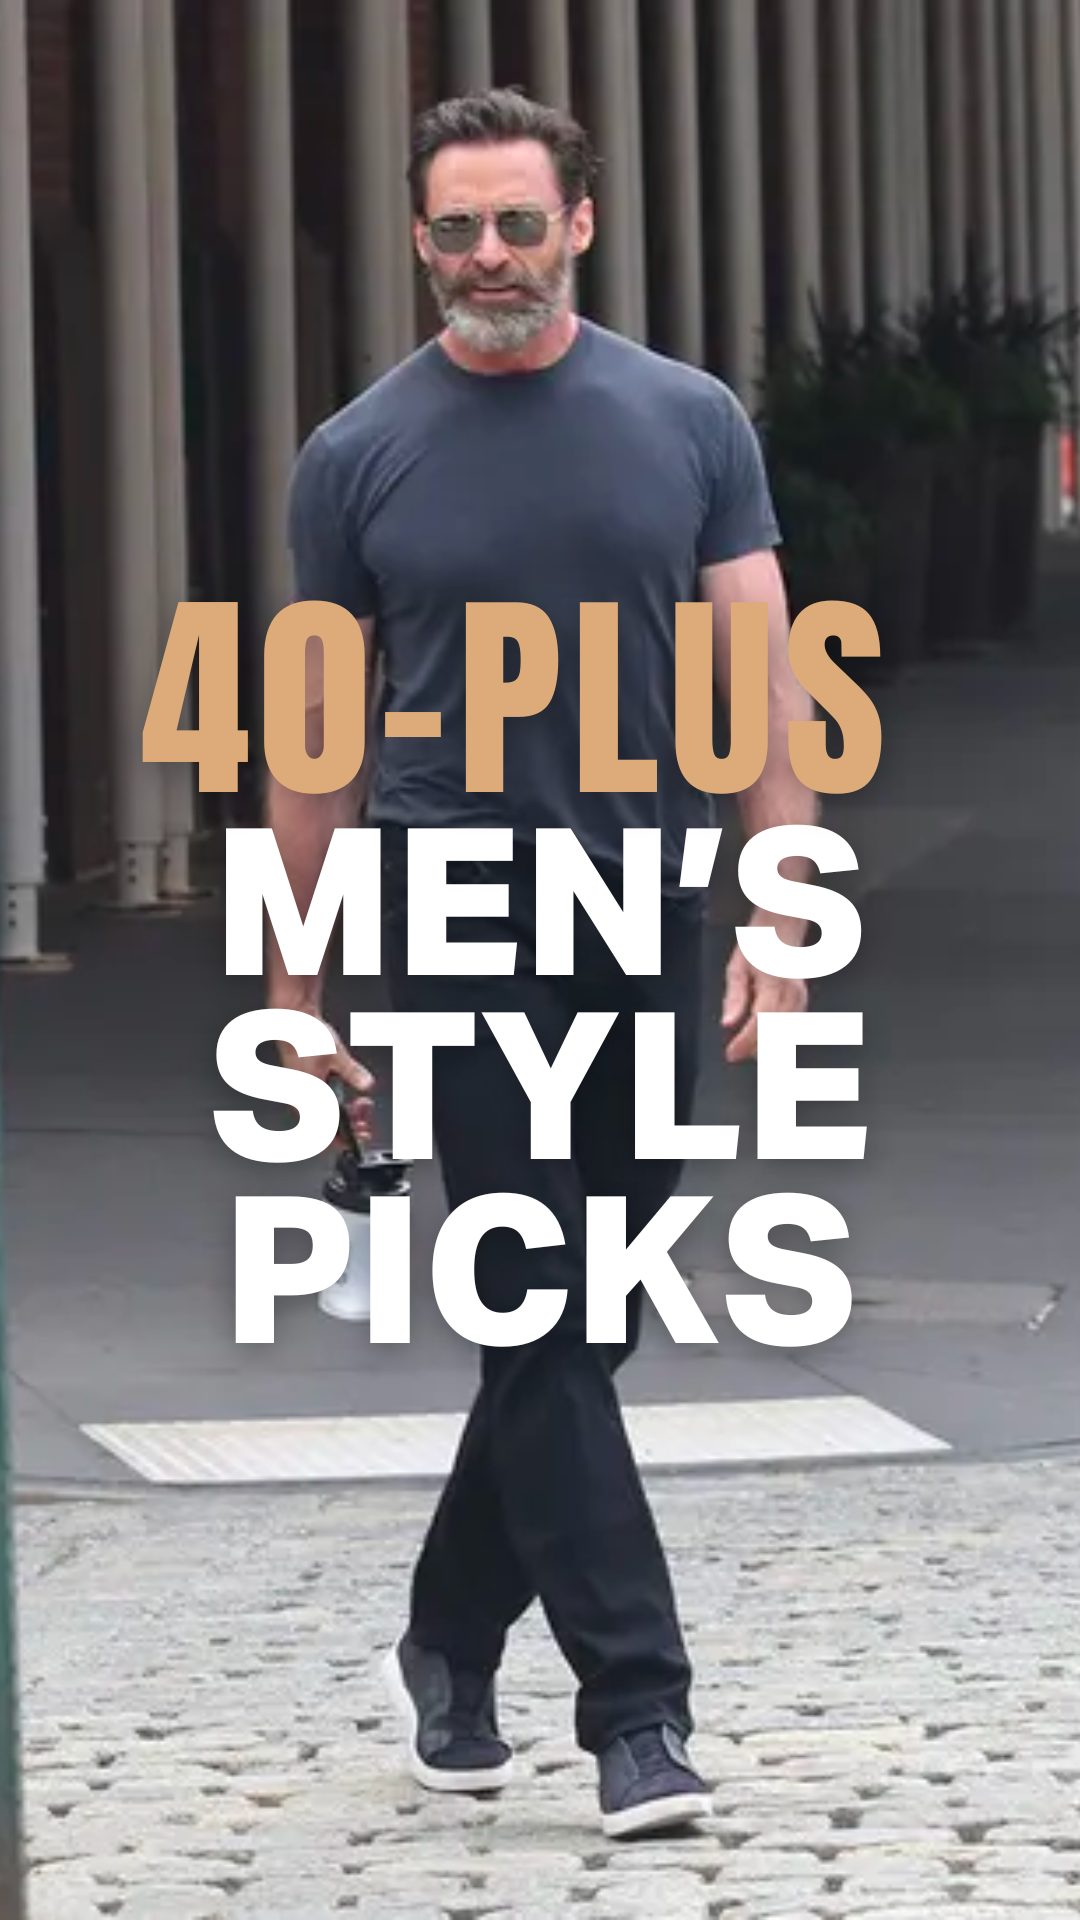 40-plus men's style picks